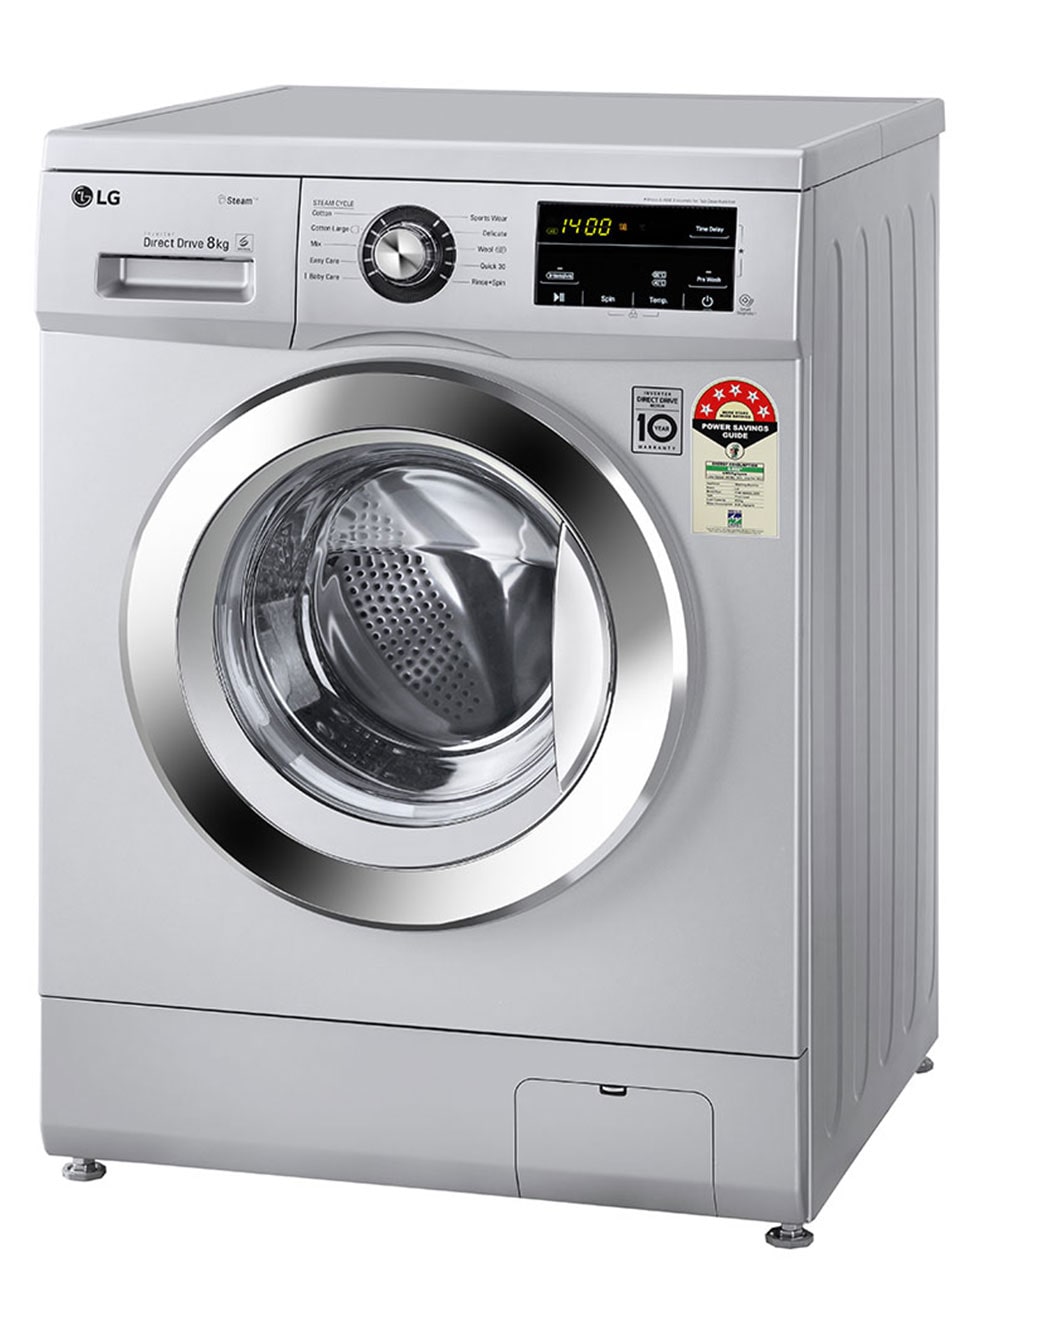 Washing machines 101: Top maintenance tips and tricks - The Good Guys